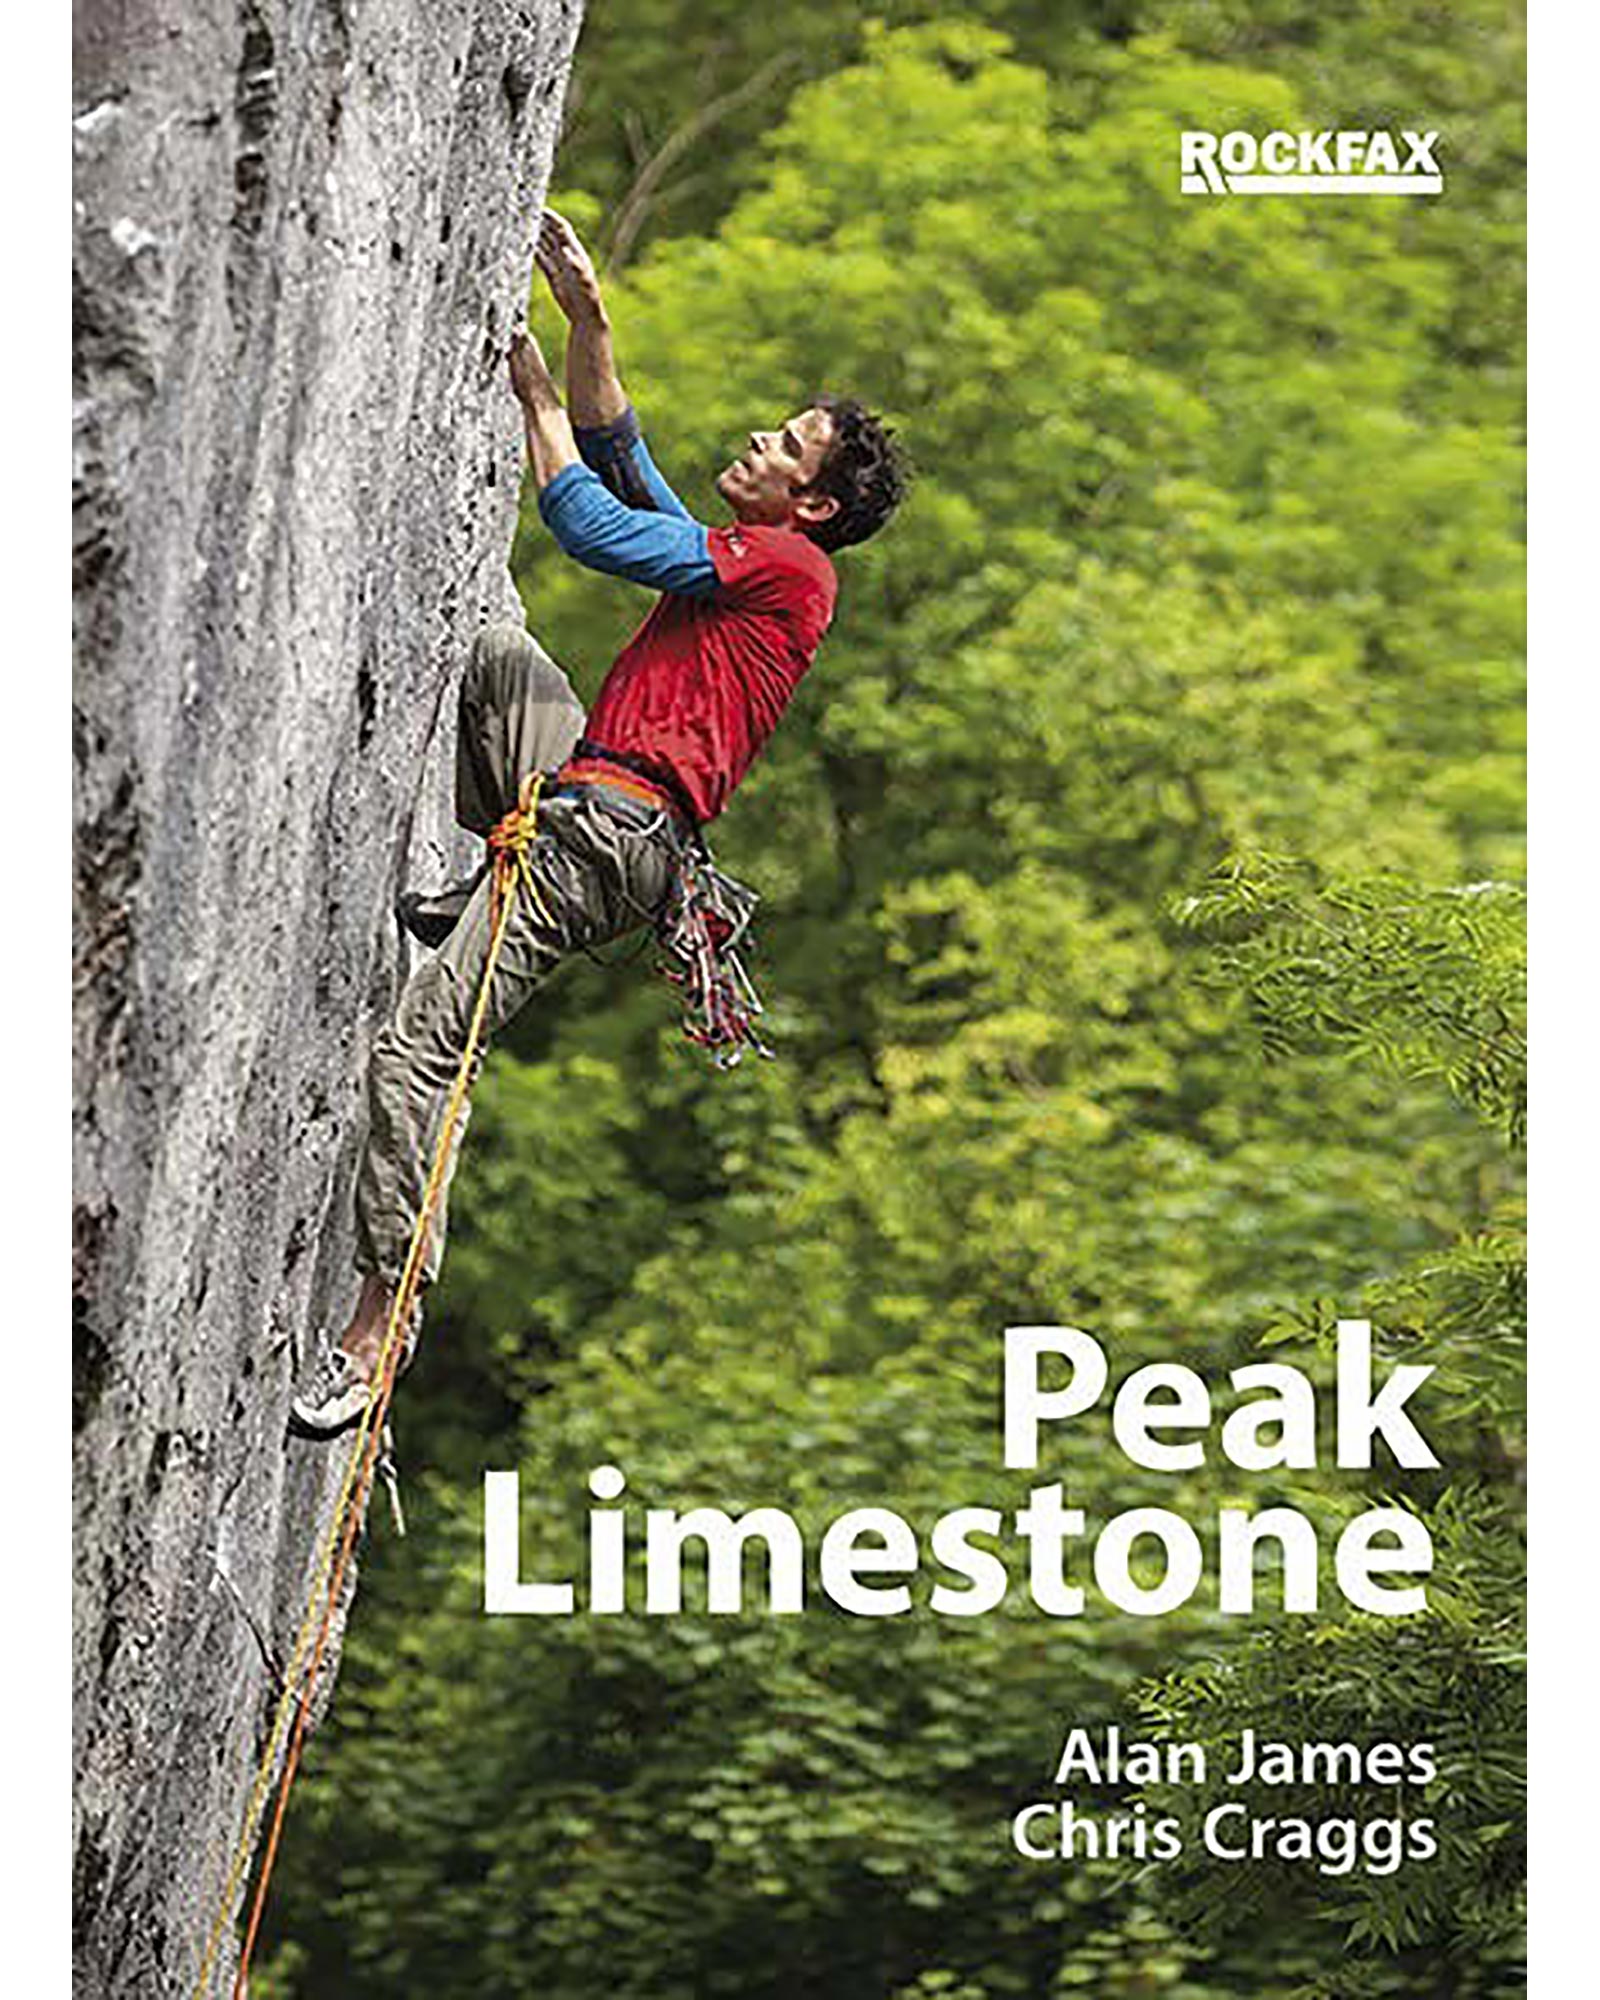 Rockfax Peak Limestone Guide Book